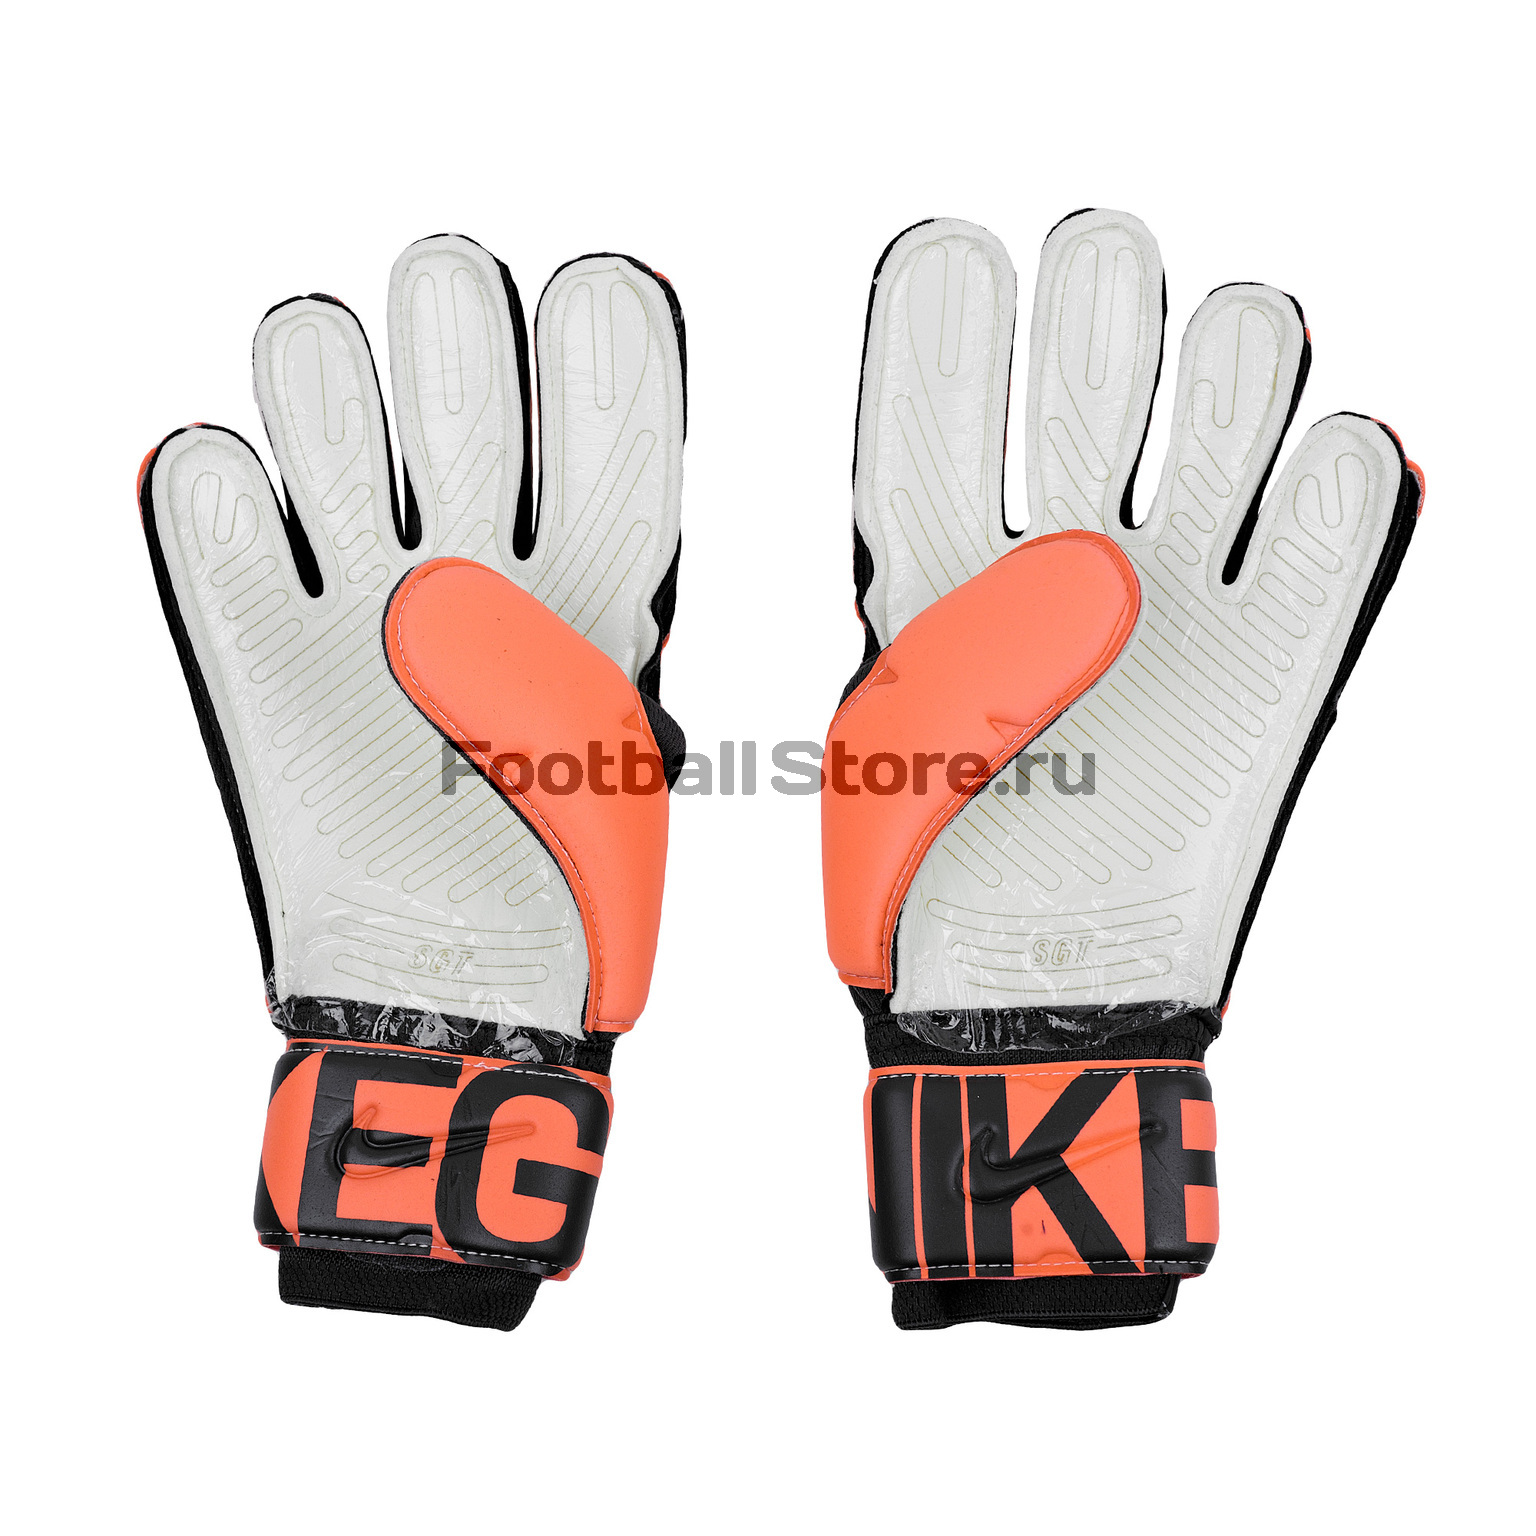 Перчатки вратарские Nike Premier GS0387-892